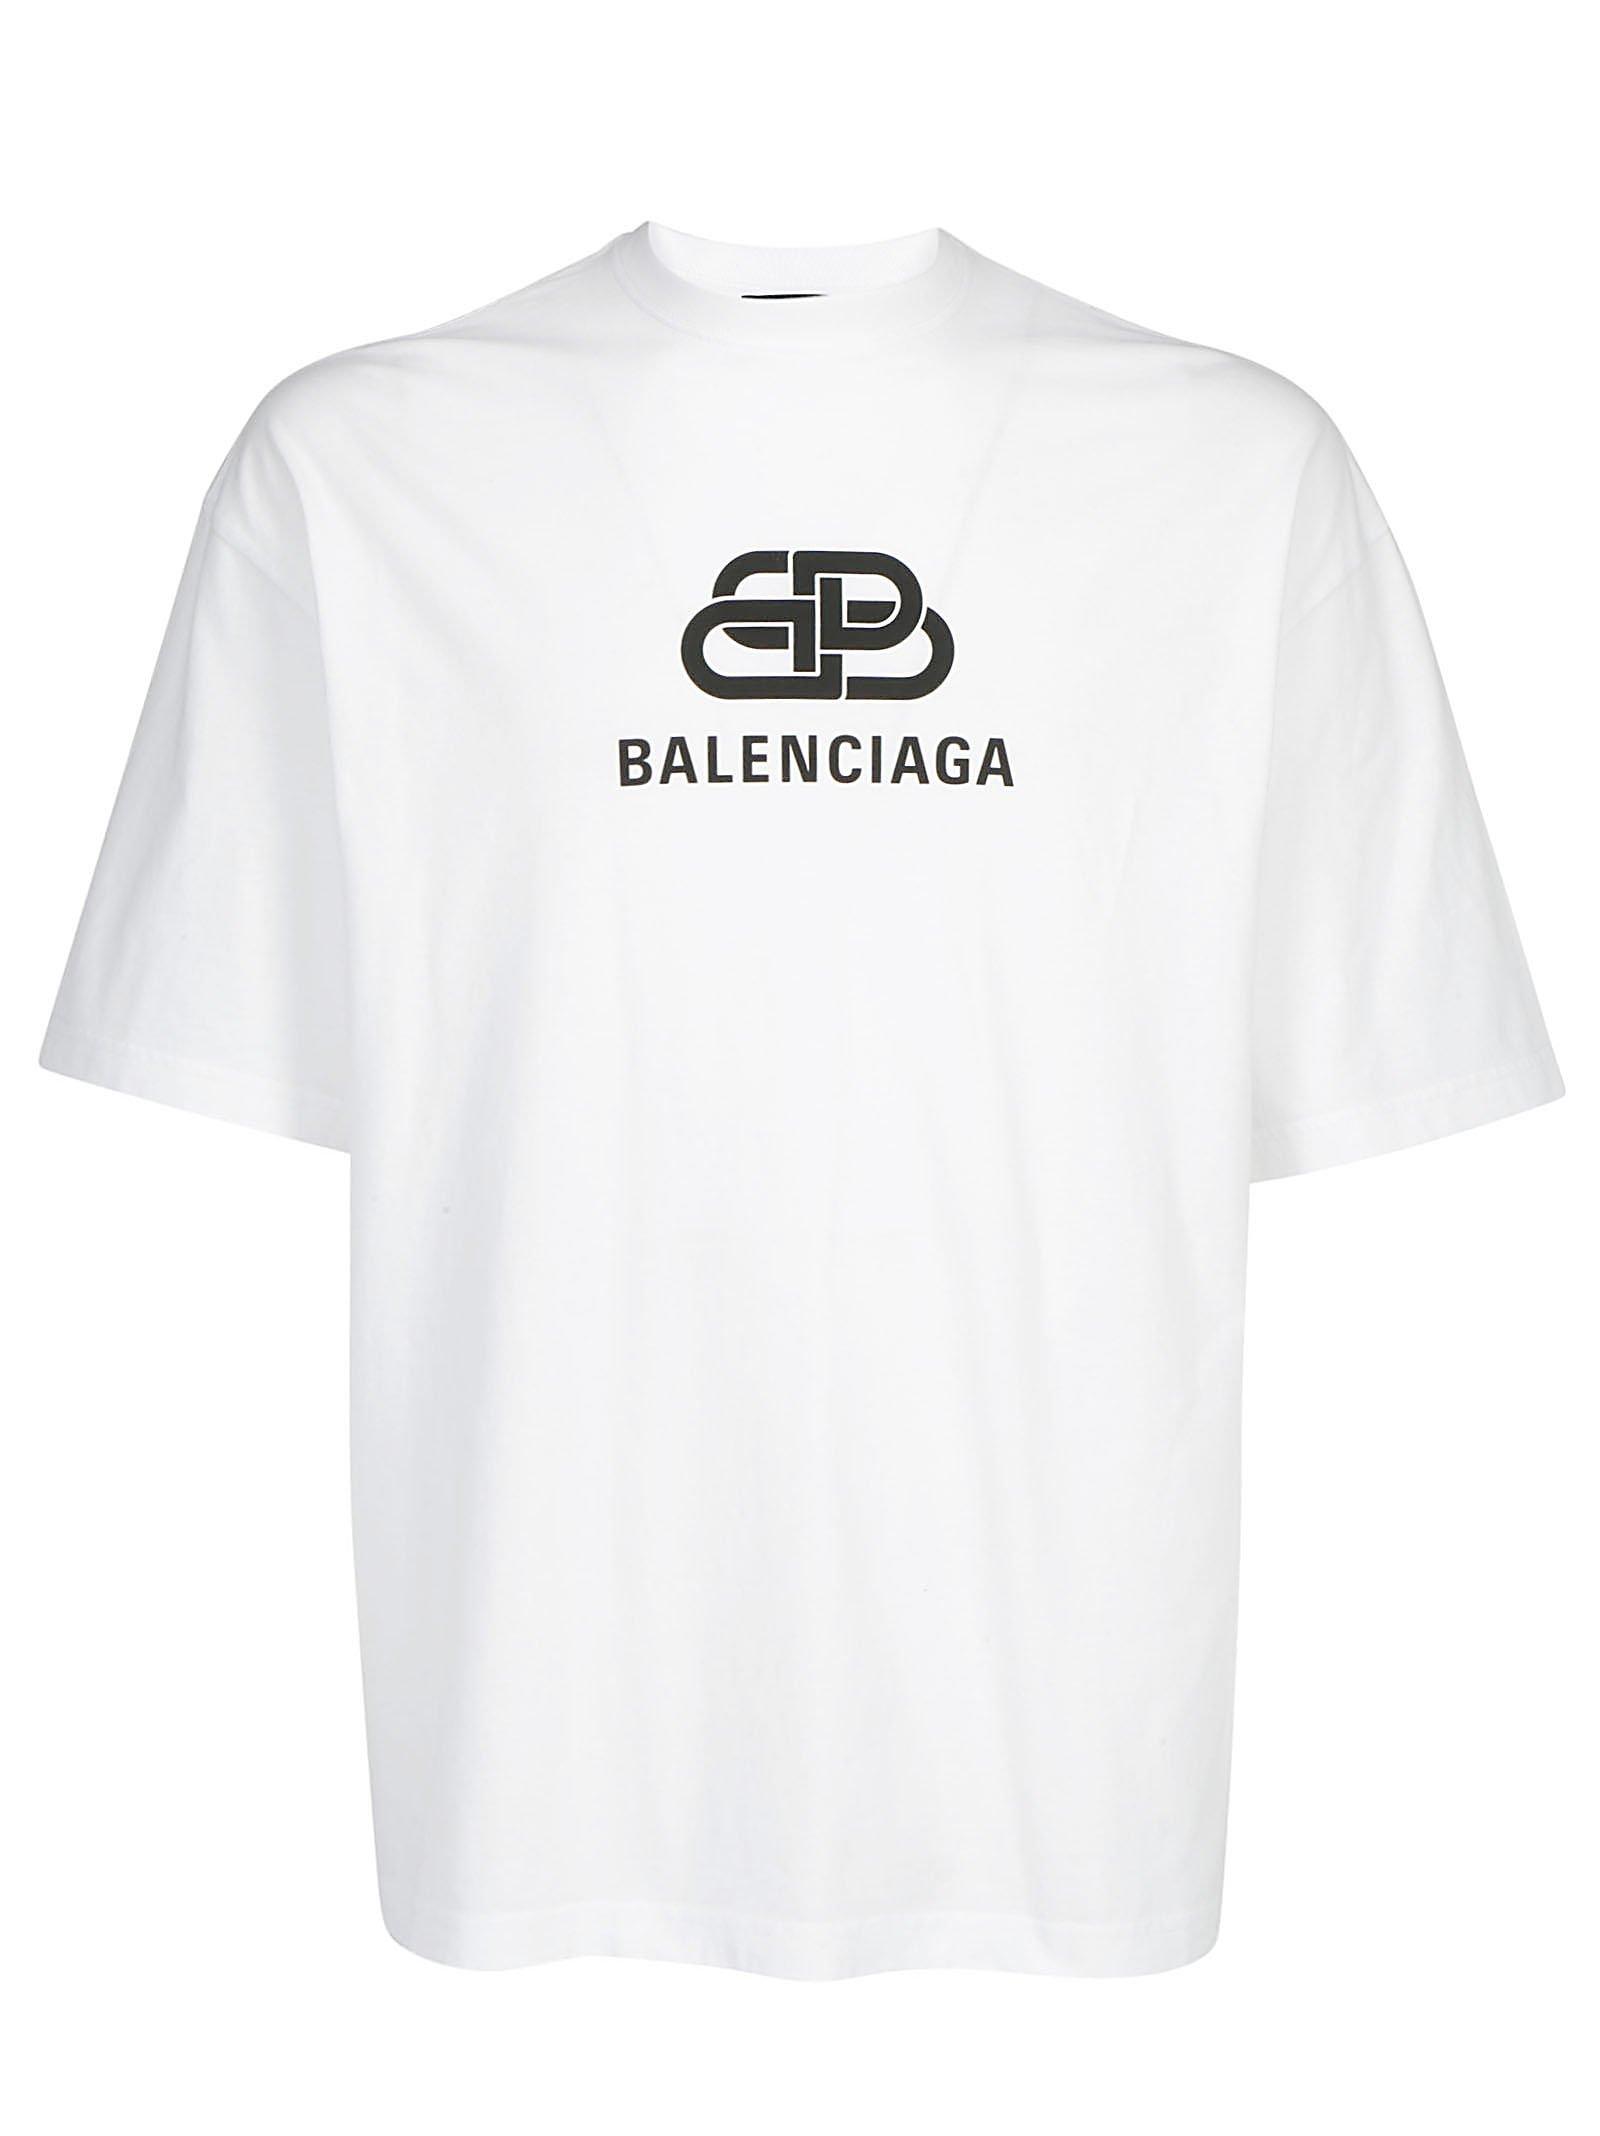 Balenciaga BB Corp TShirt  Harrods US